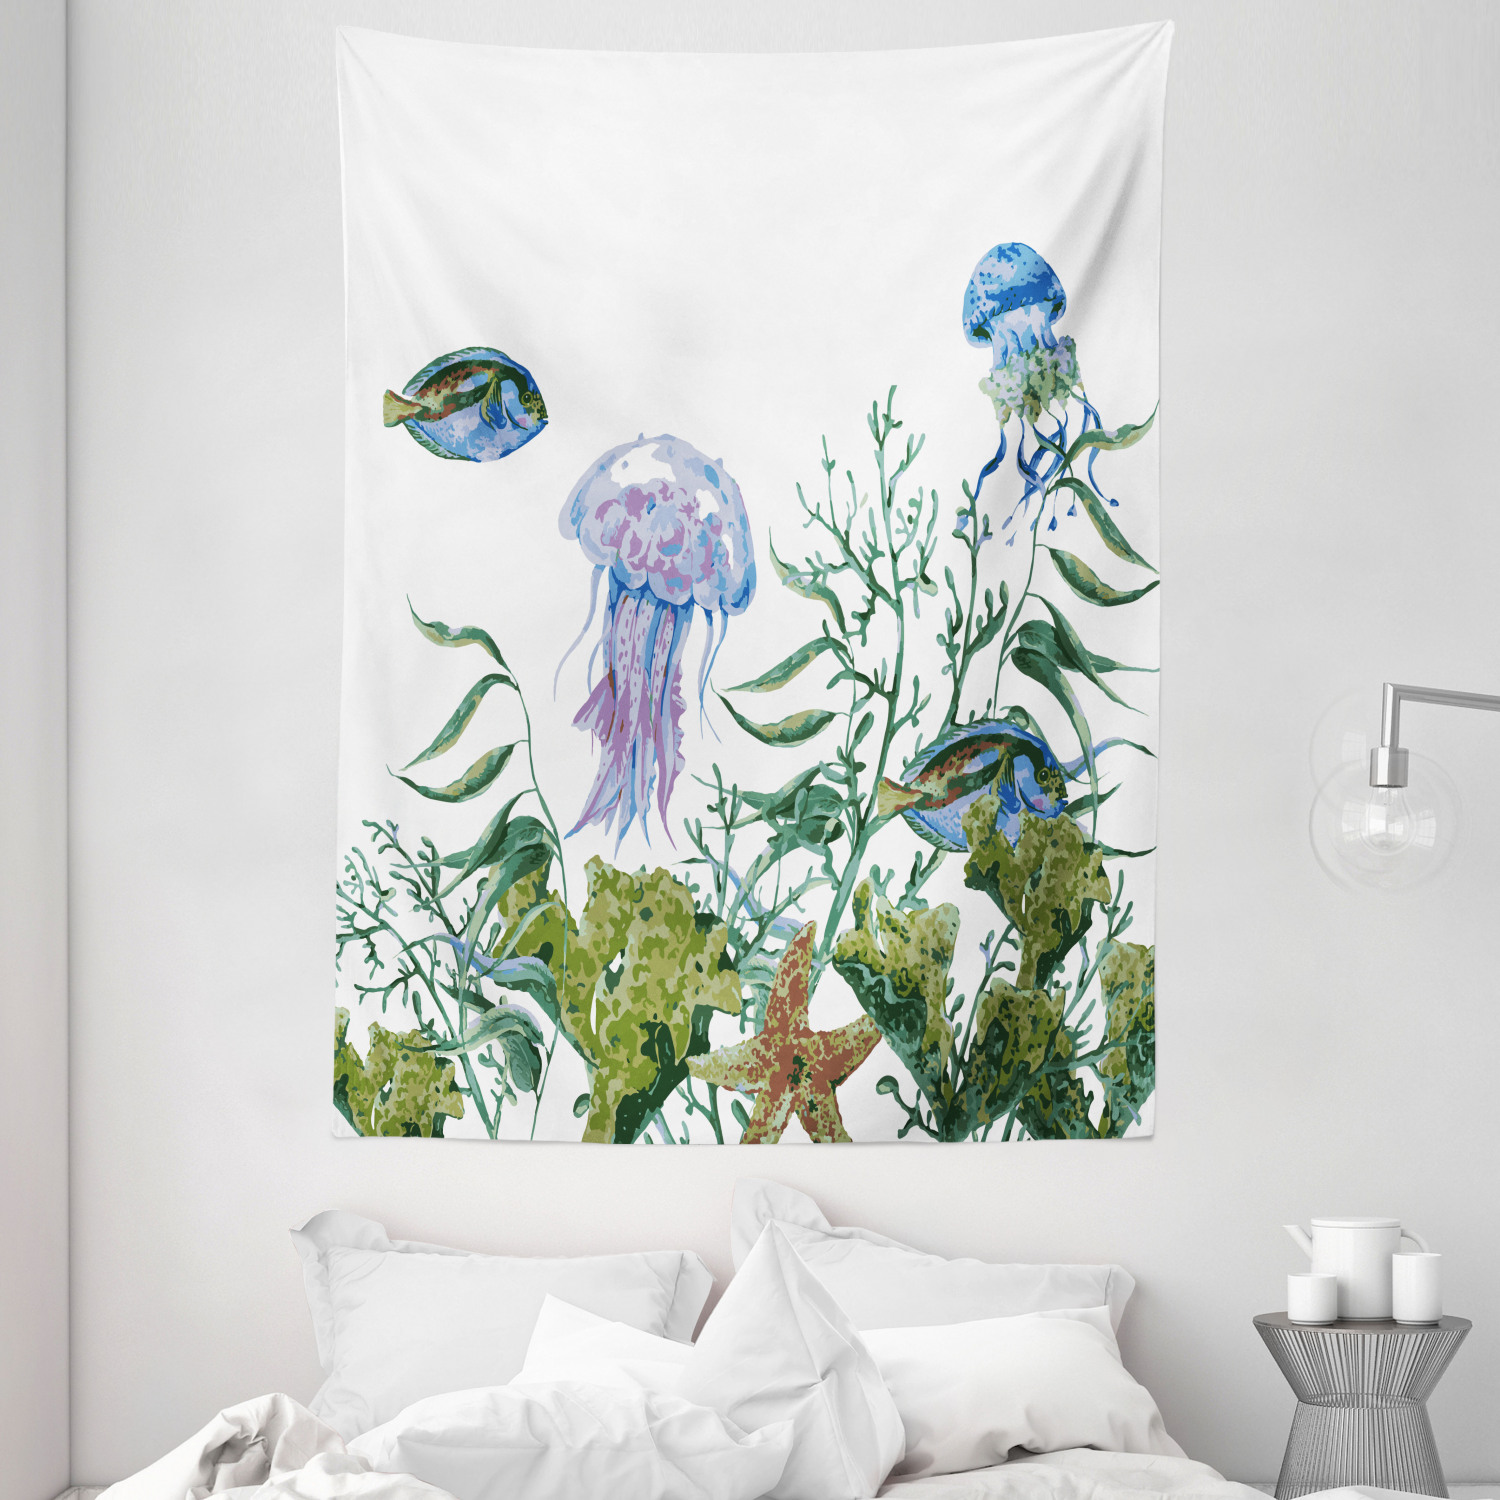 Ocean Tapestry Seaweed Jellyfish Fish Print Wall Hanging Decor